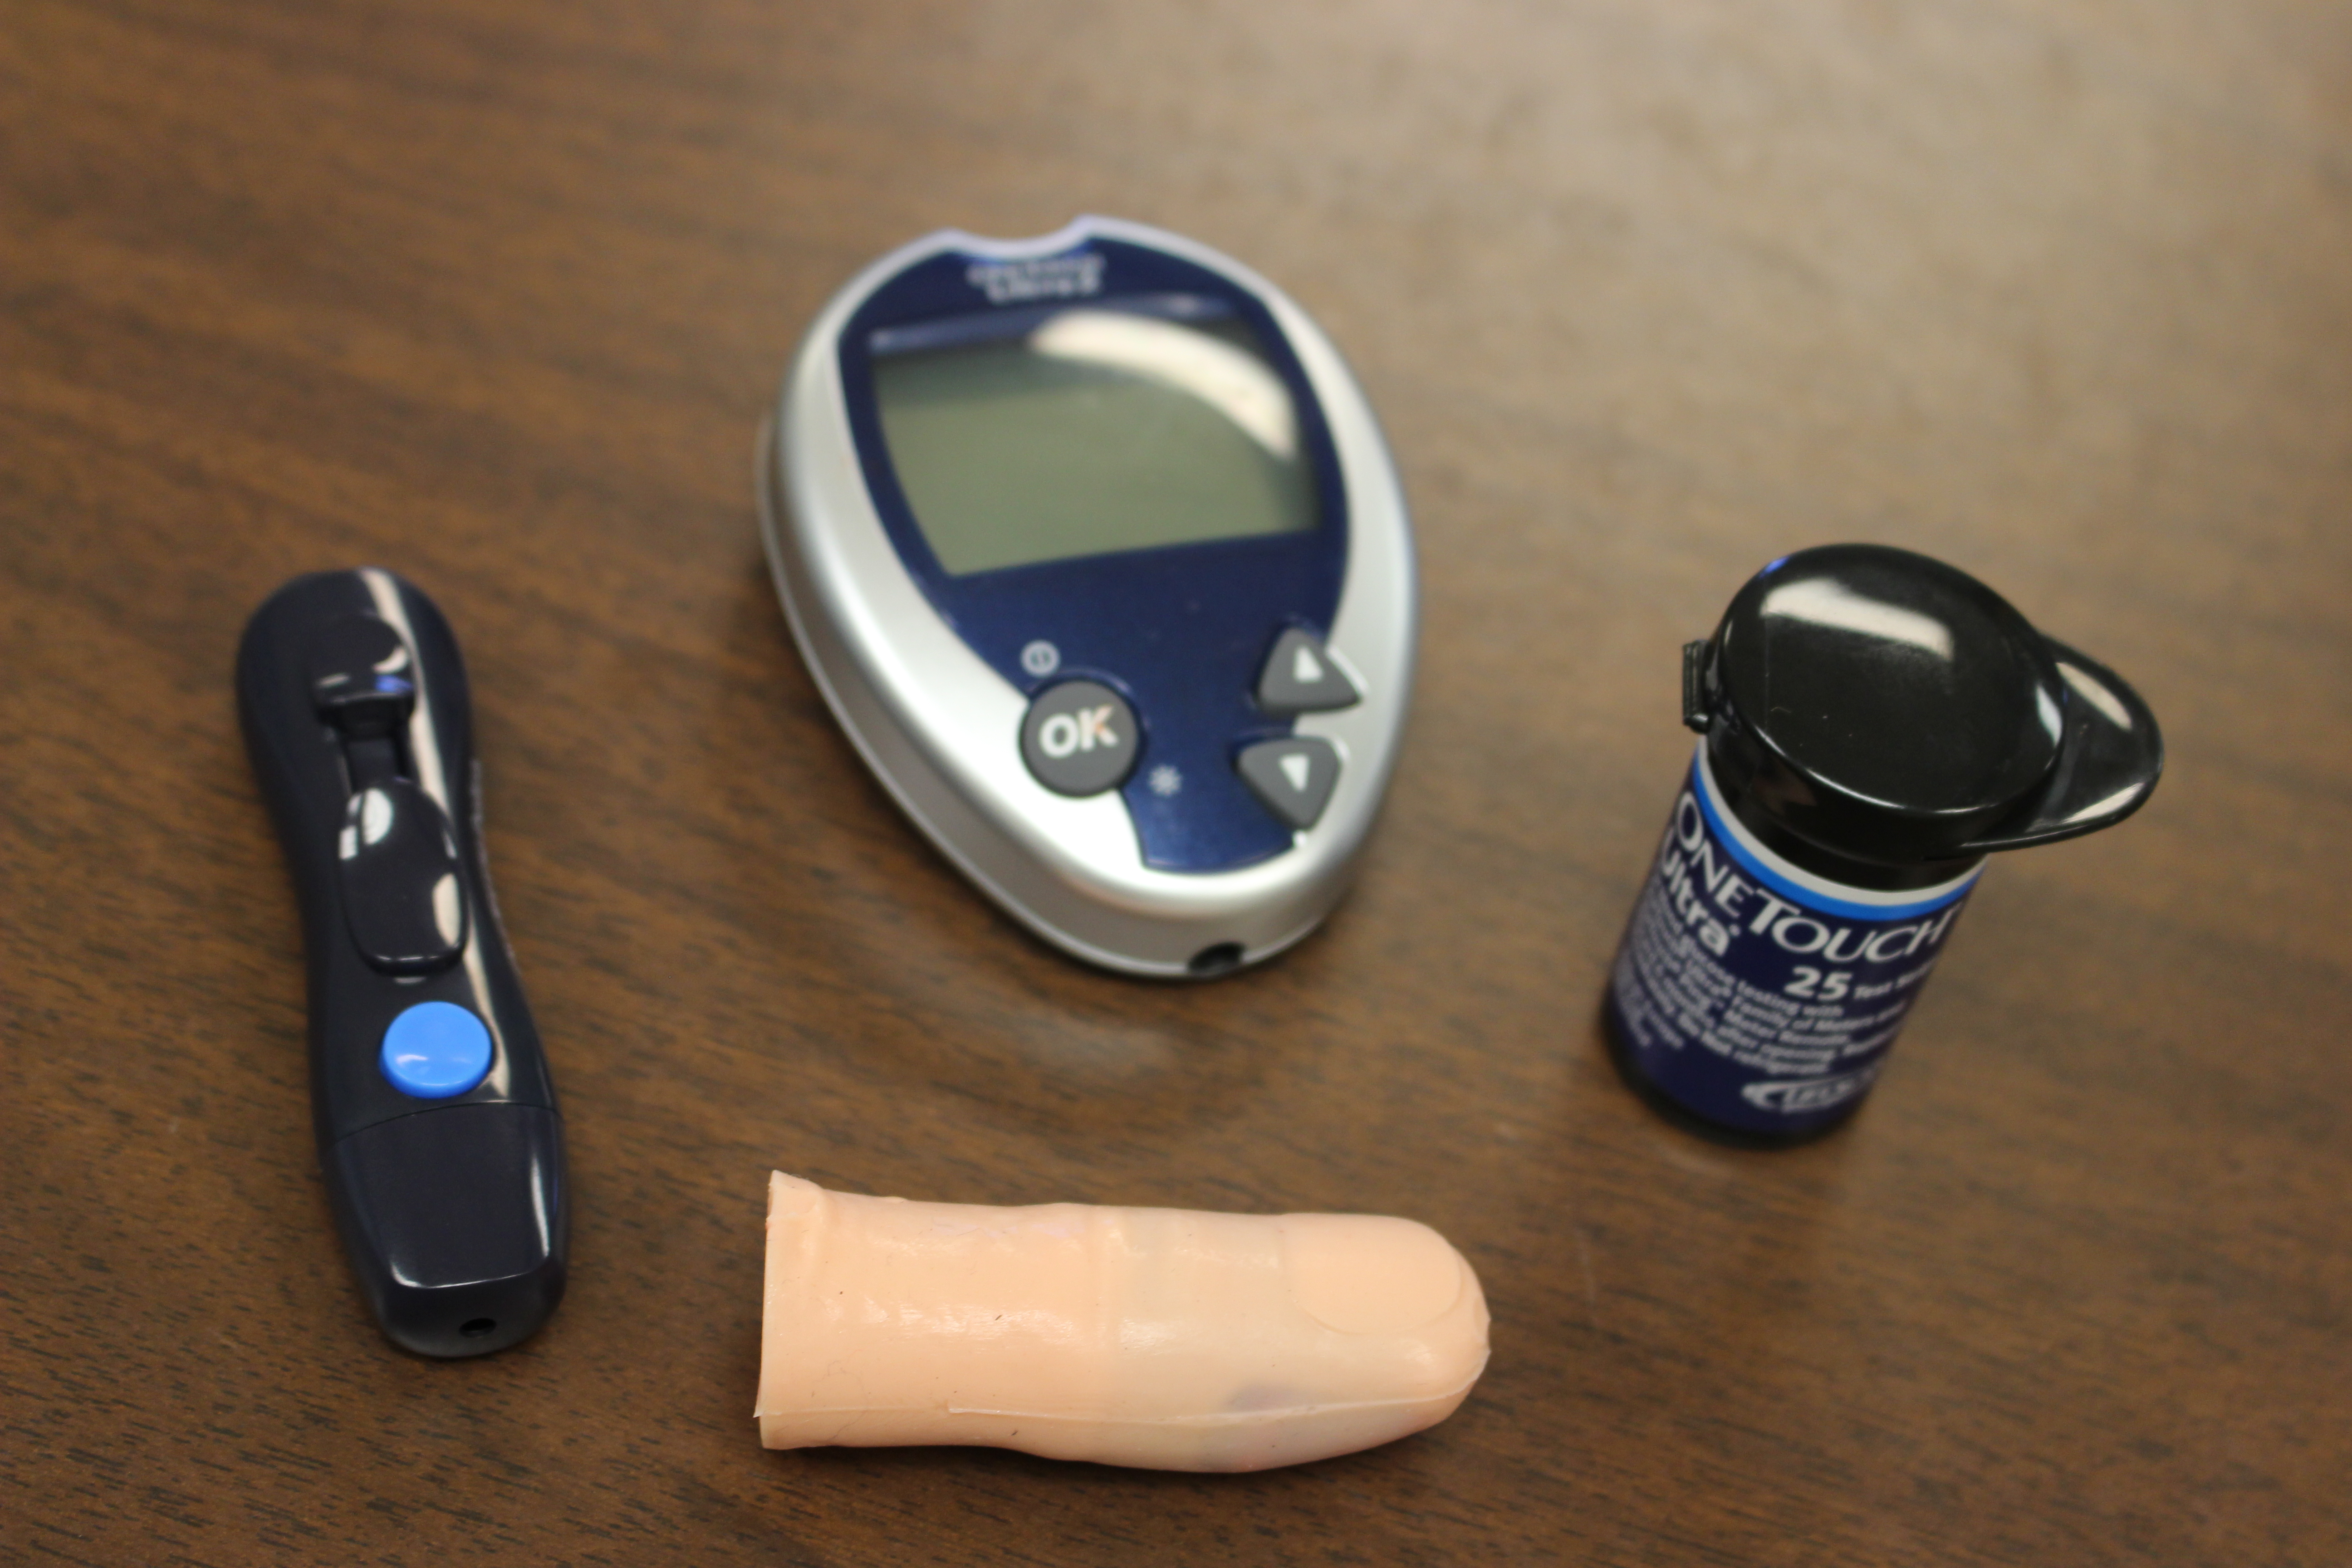 New method of diabetes testing developed by nursing instructor